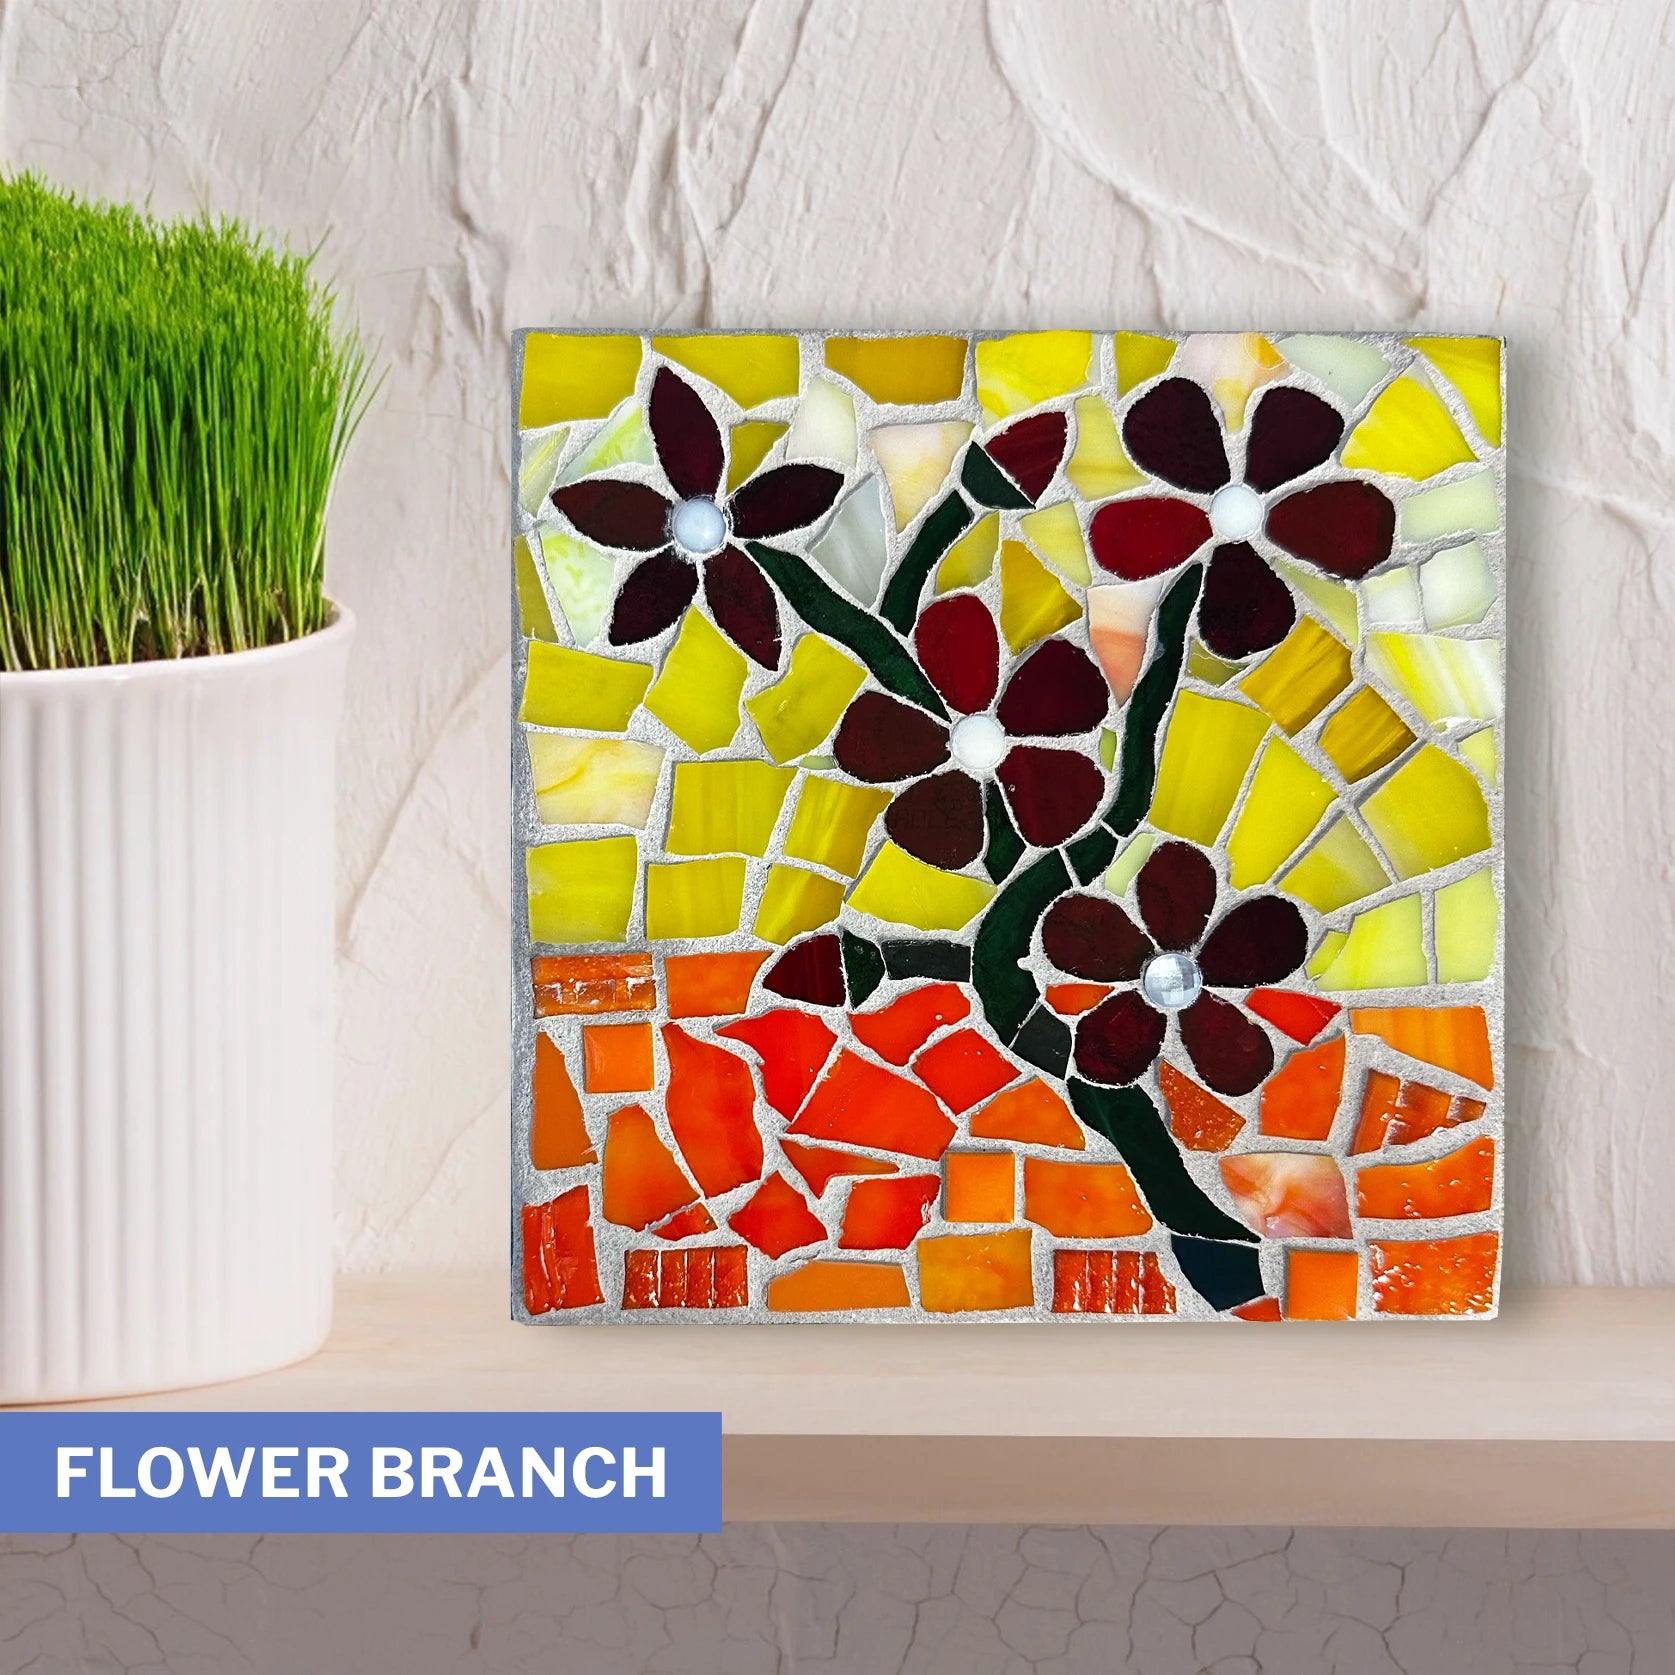 6" Floral Tiles – Choose Your Design